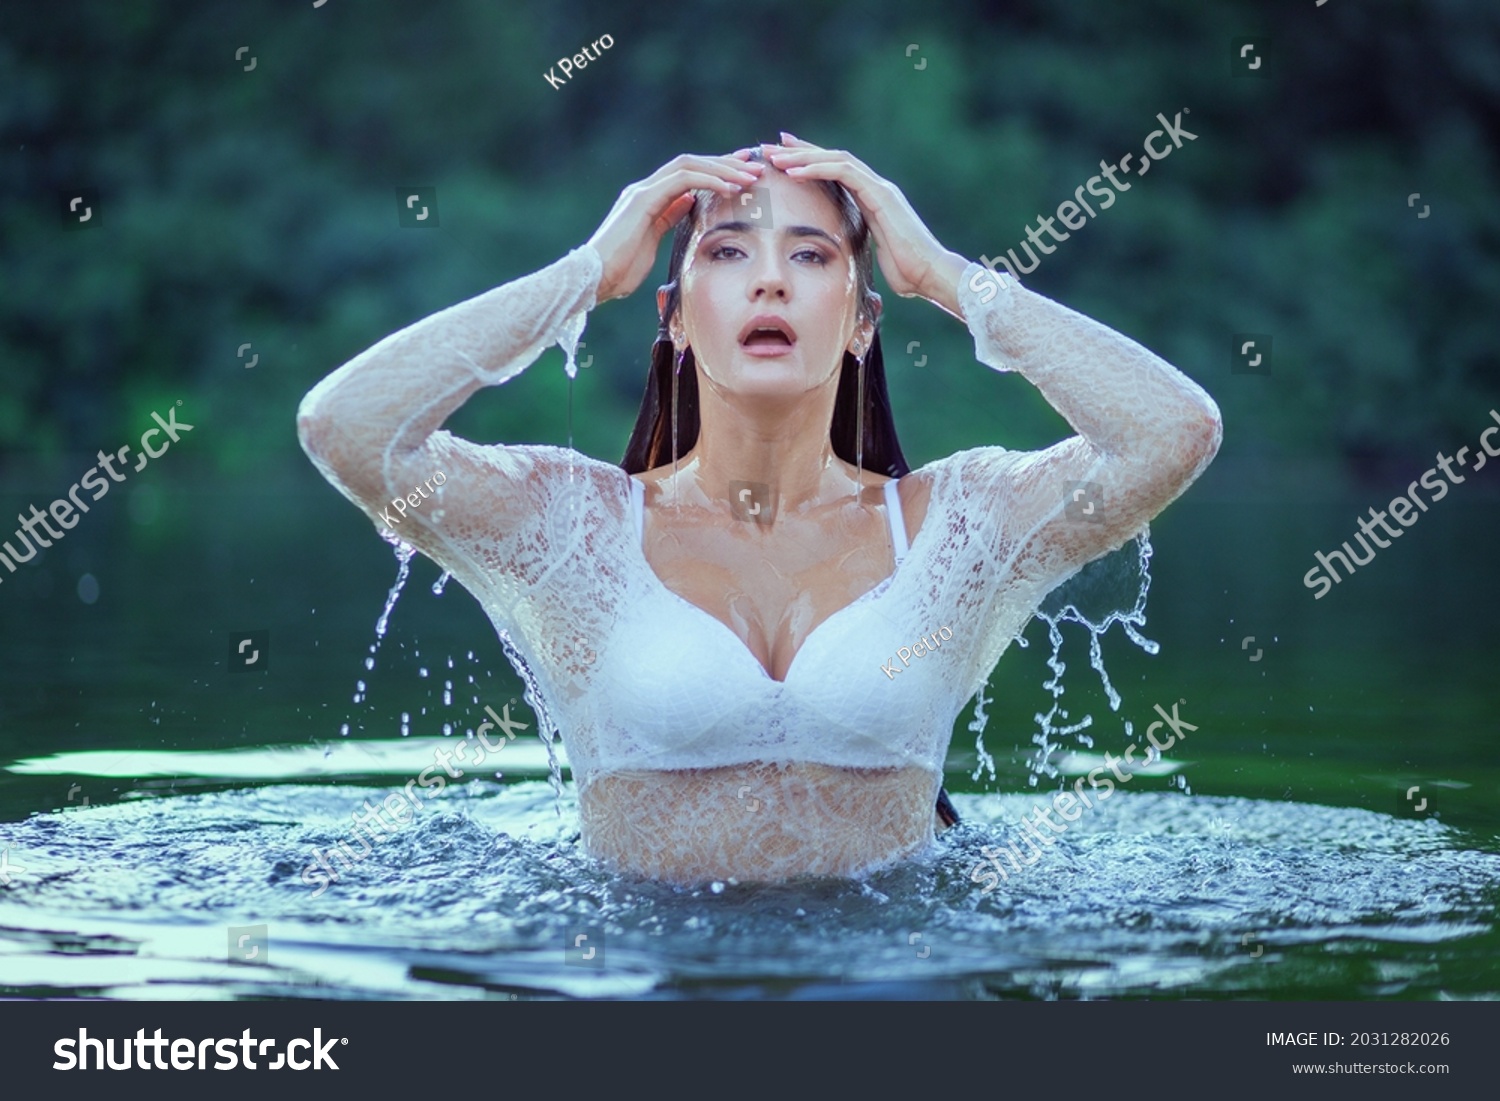 ashraful islam azad add hot and wet girls photo